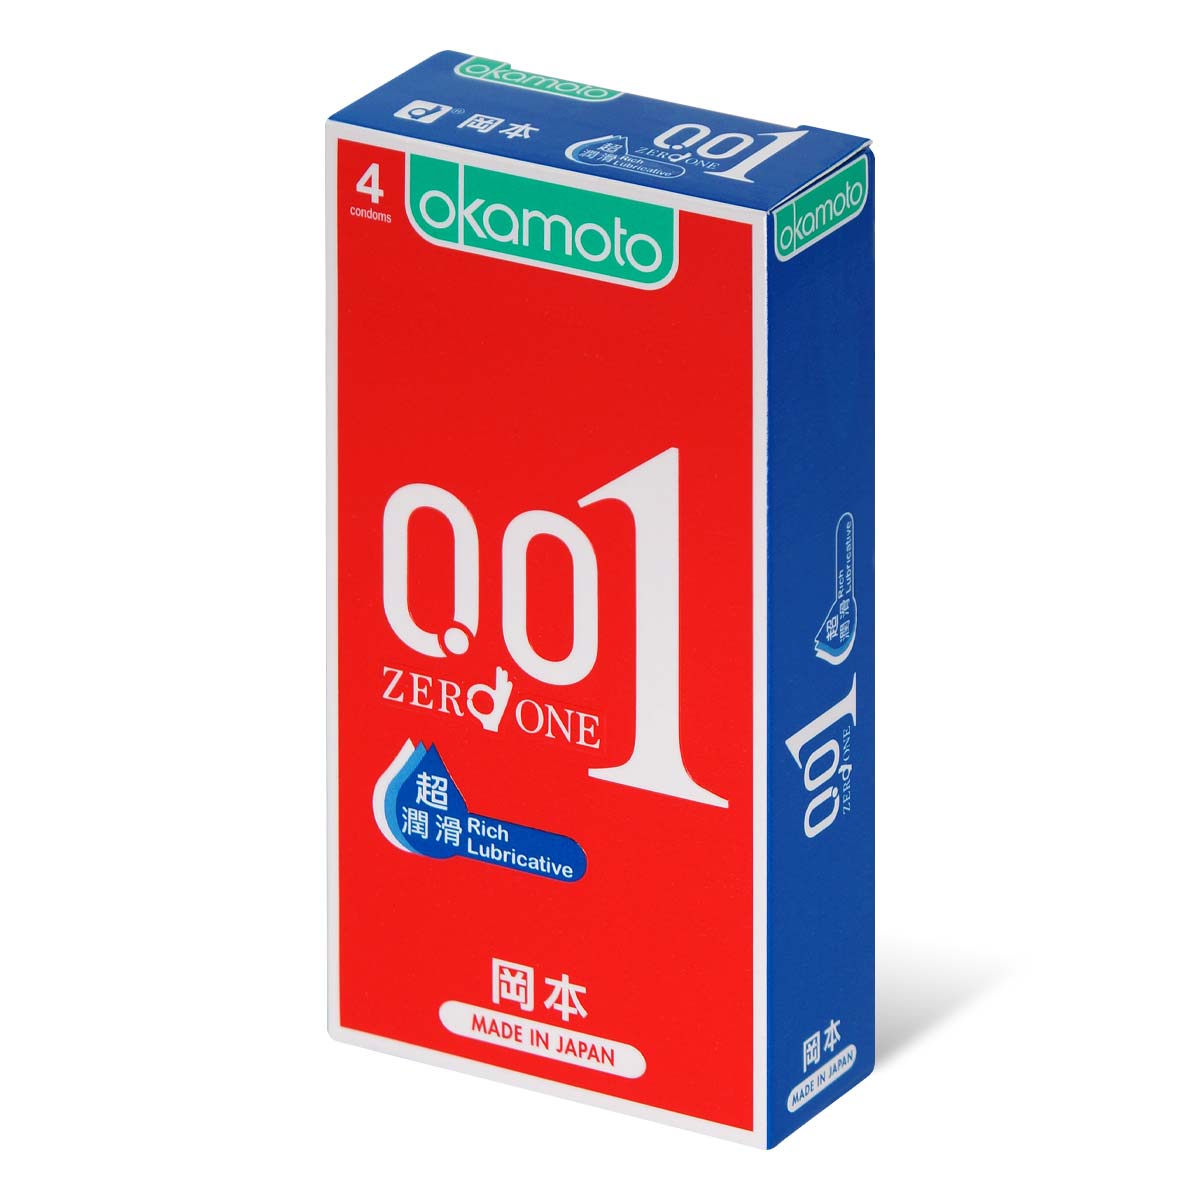 Okamoto 0.01 Rich Lubricative 4's Pack PU Condom-p_1